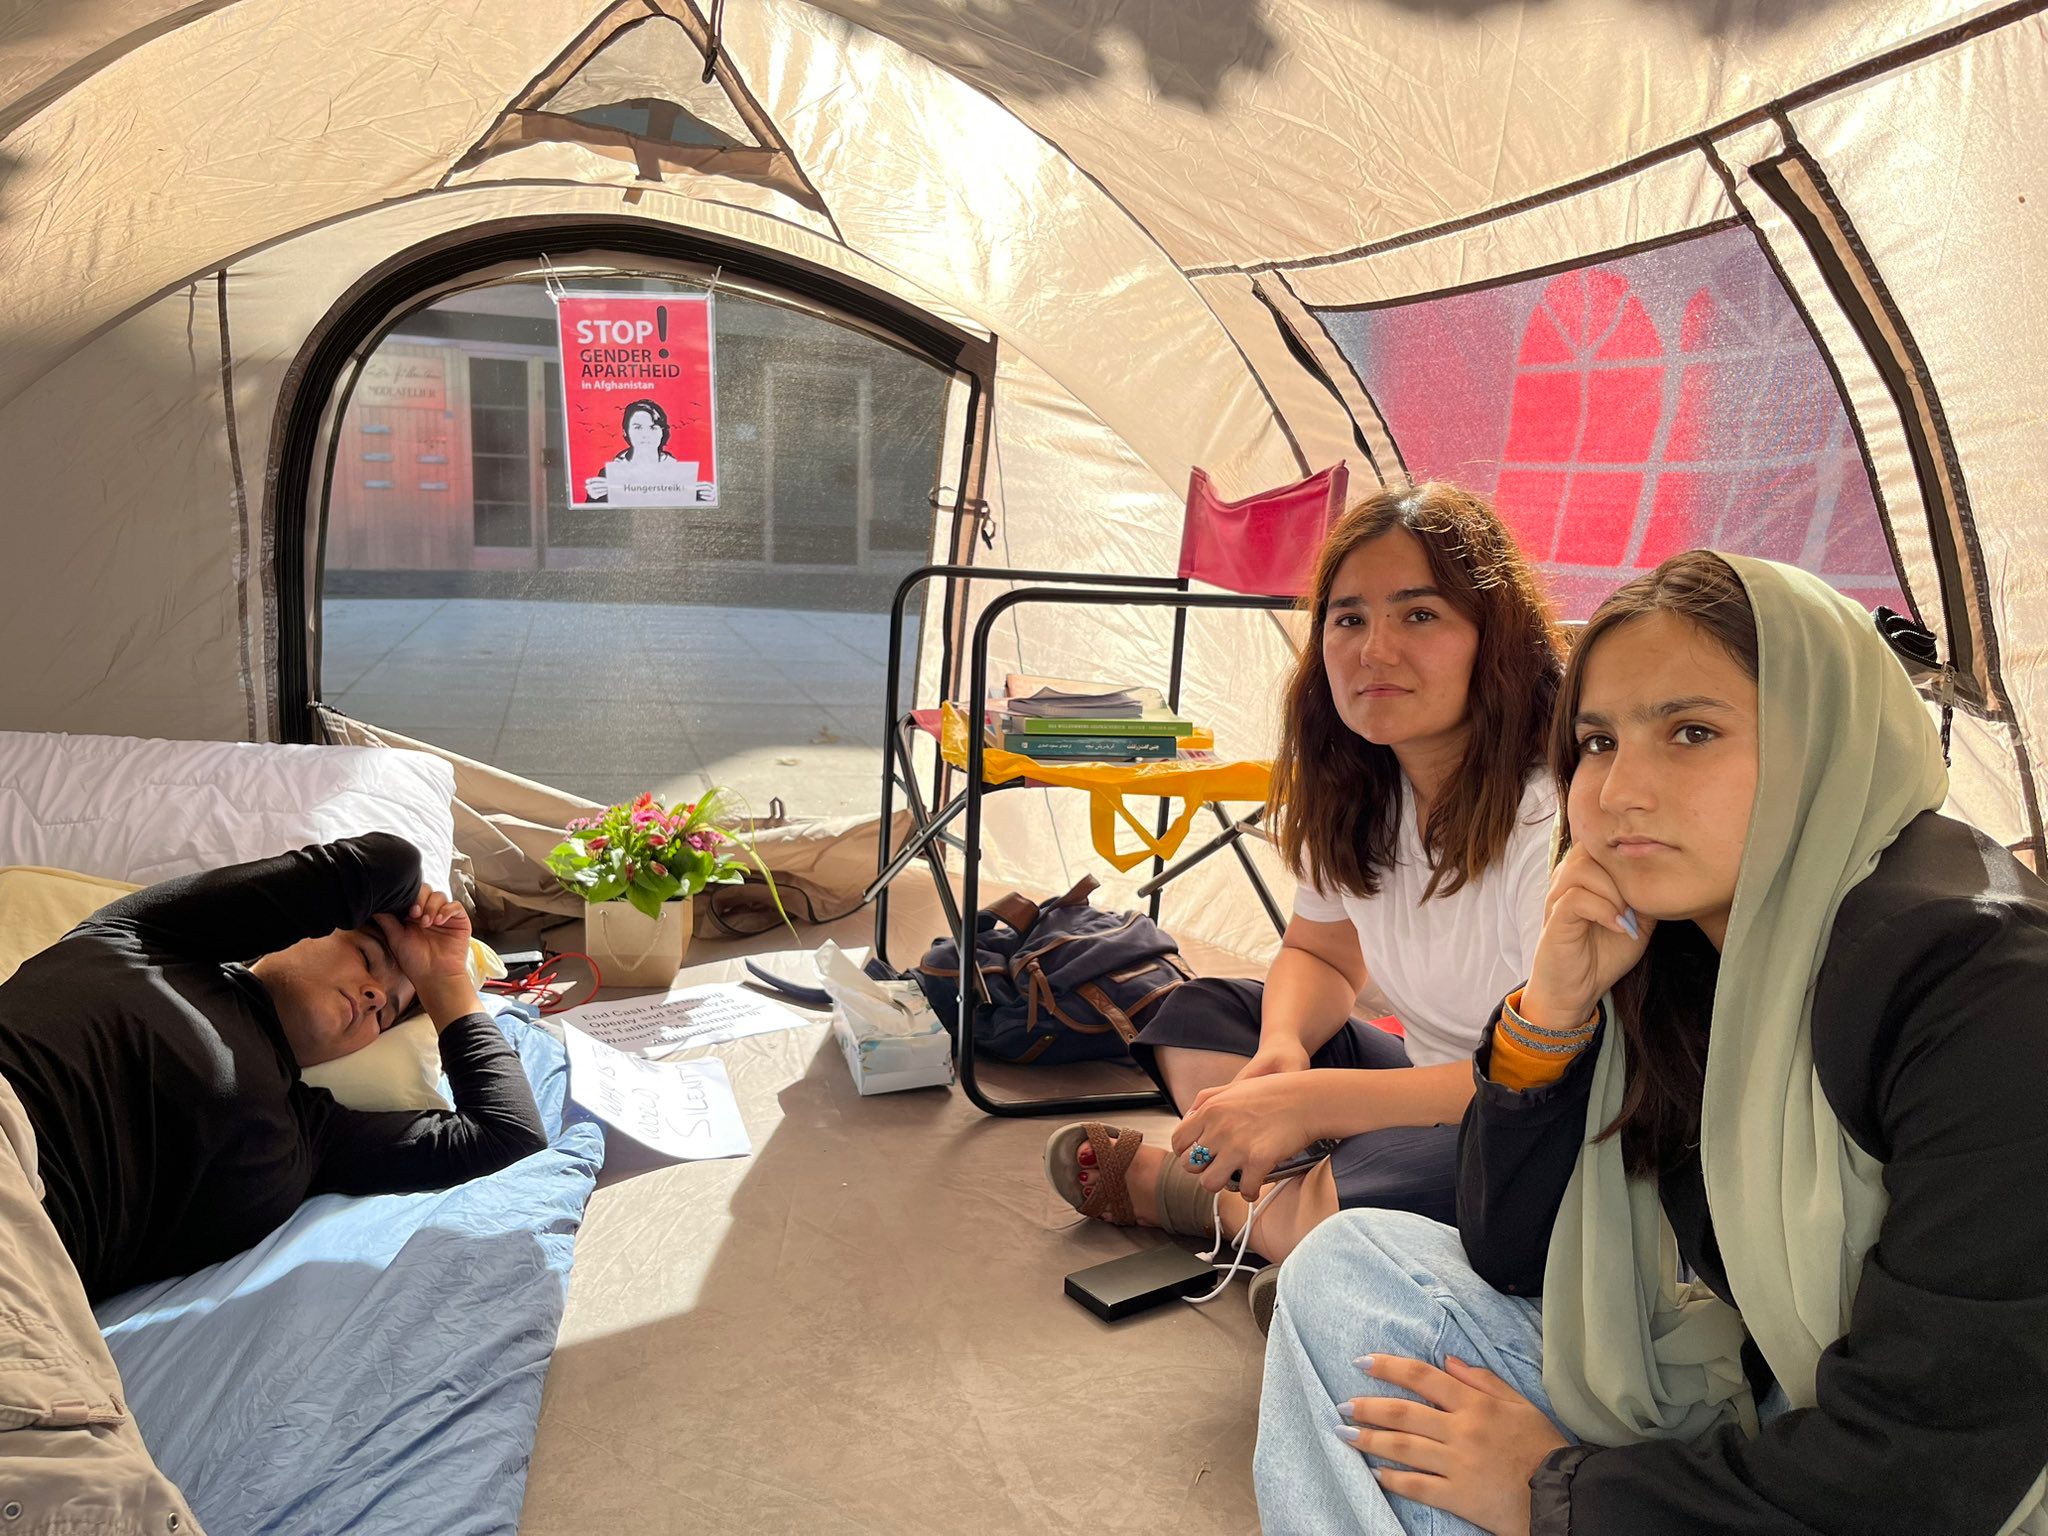 Tamina Zariab Pariani’s Hunger Strike against the Taliban’s Gender Apartheid in Afghanistan